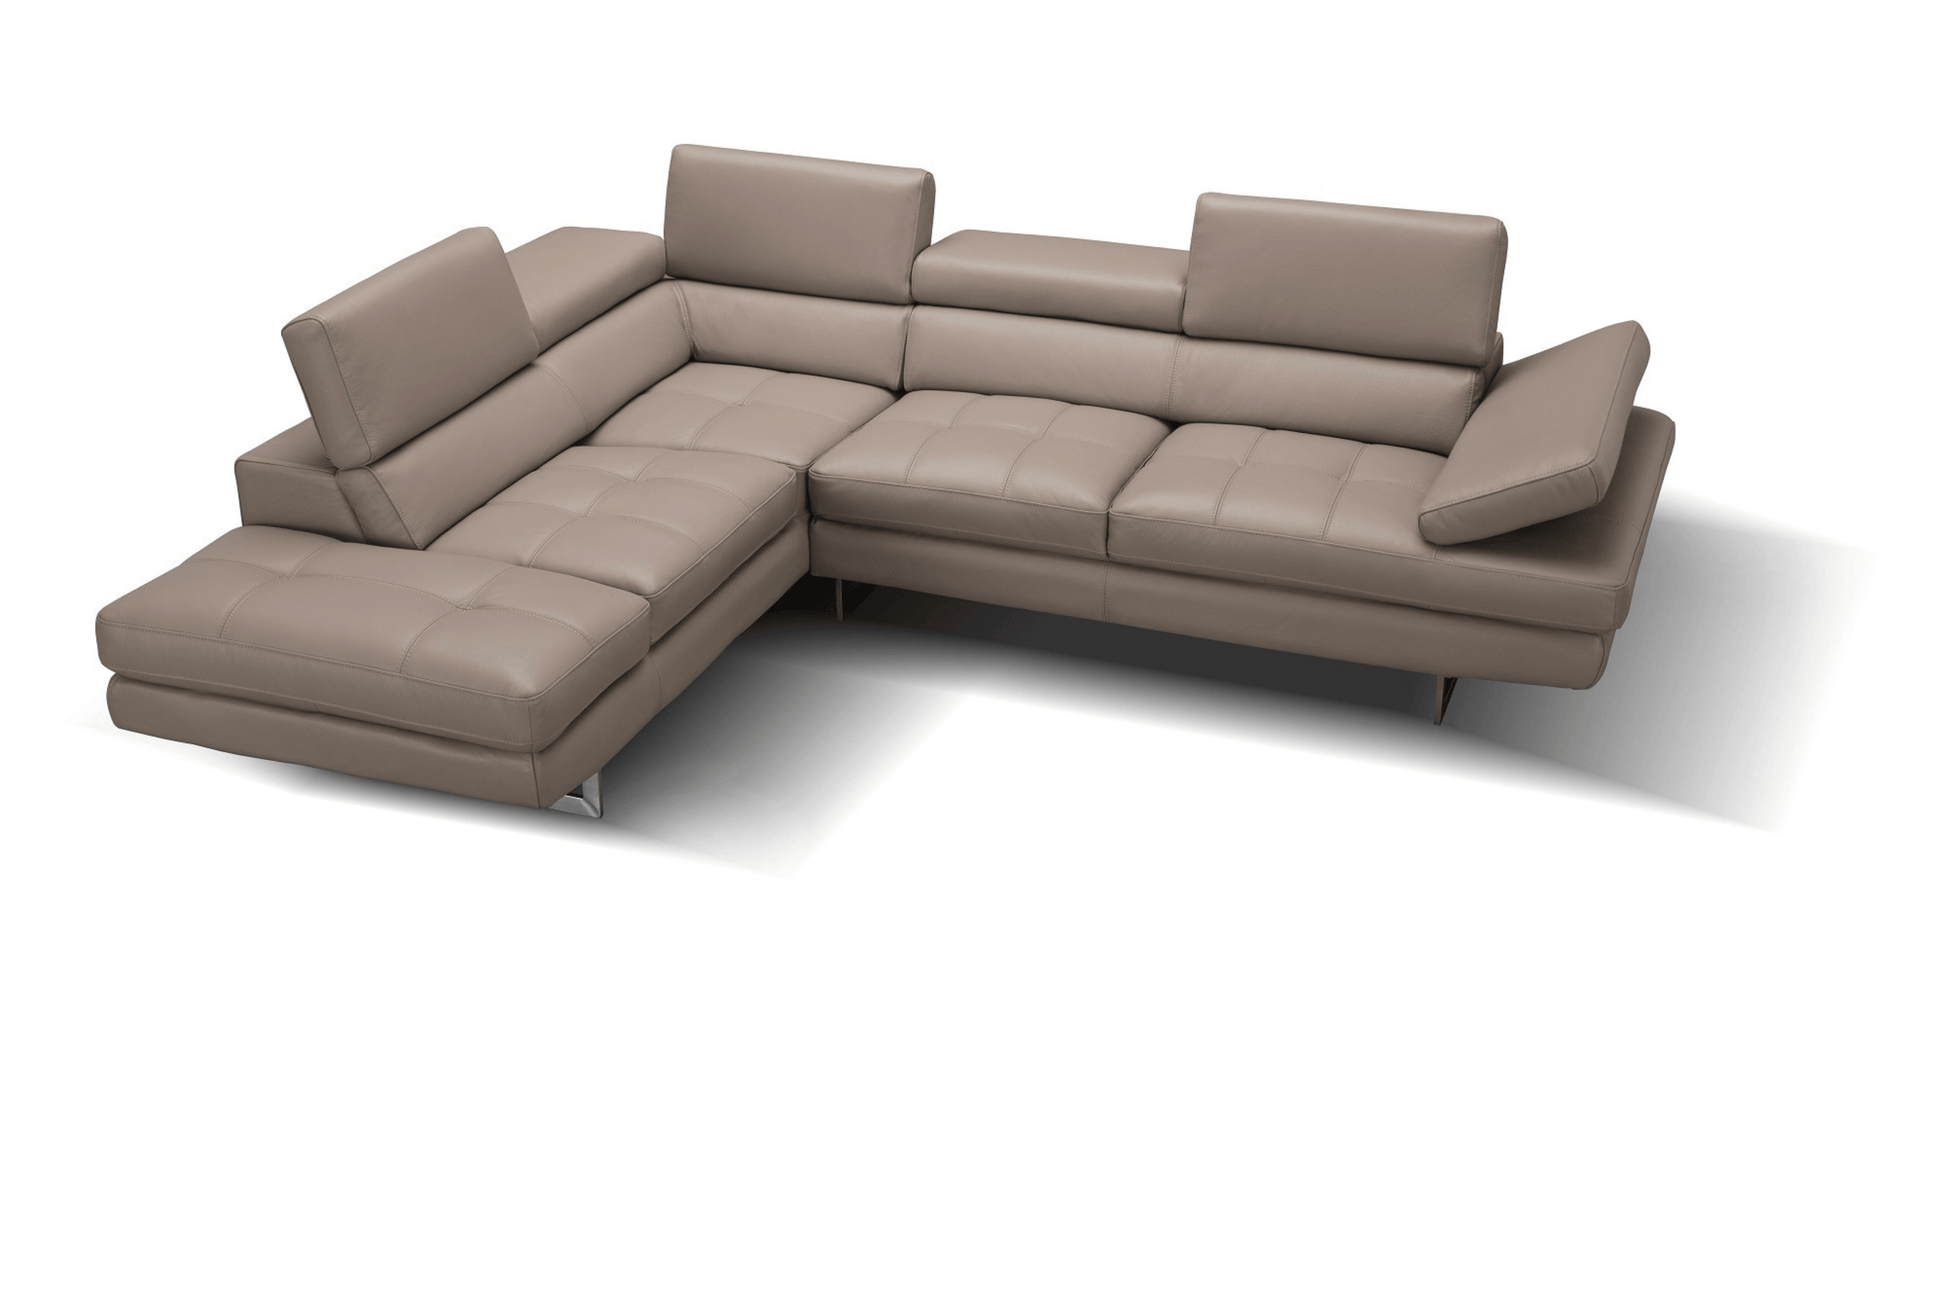 A761 Italian Leather Sectional in Peanut - Venini Furniture 